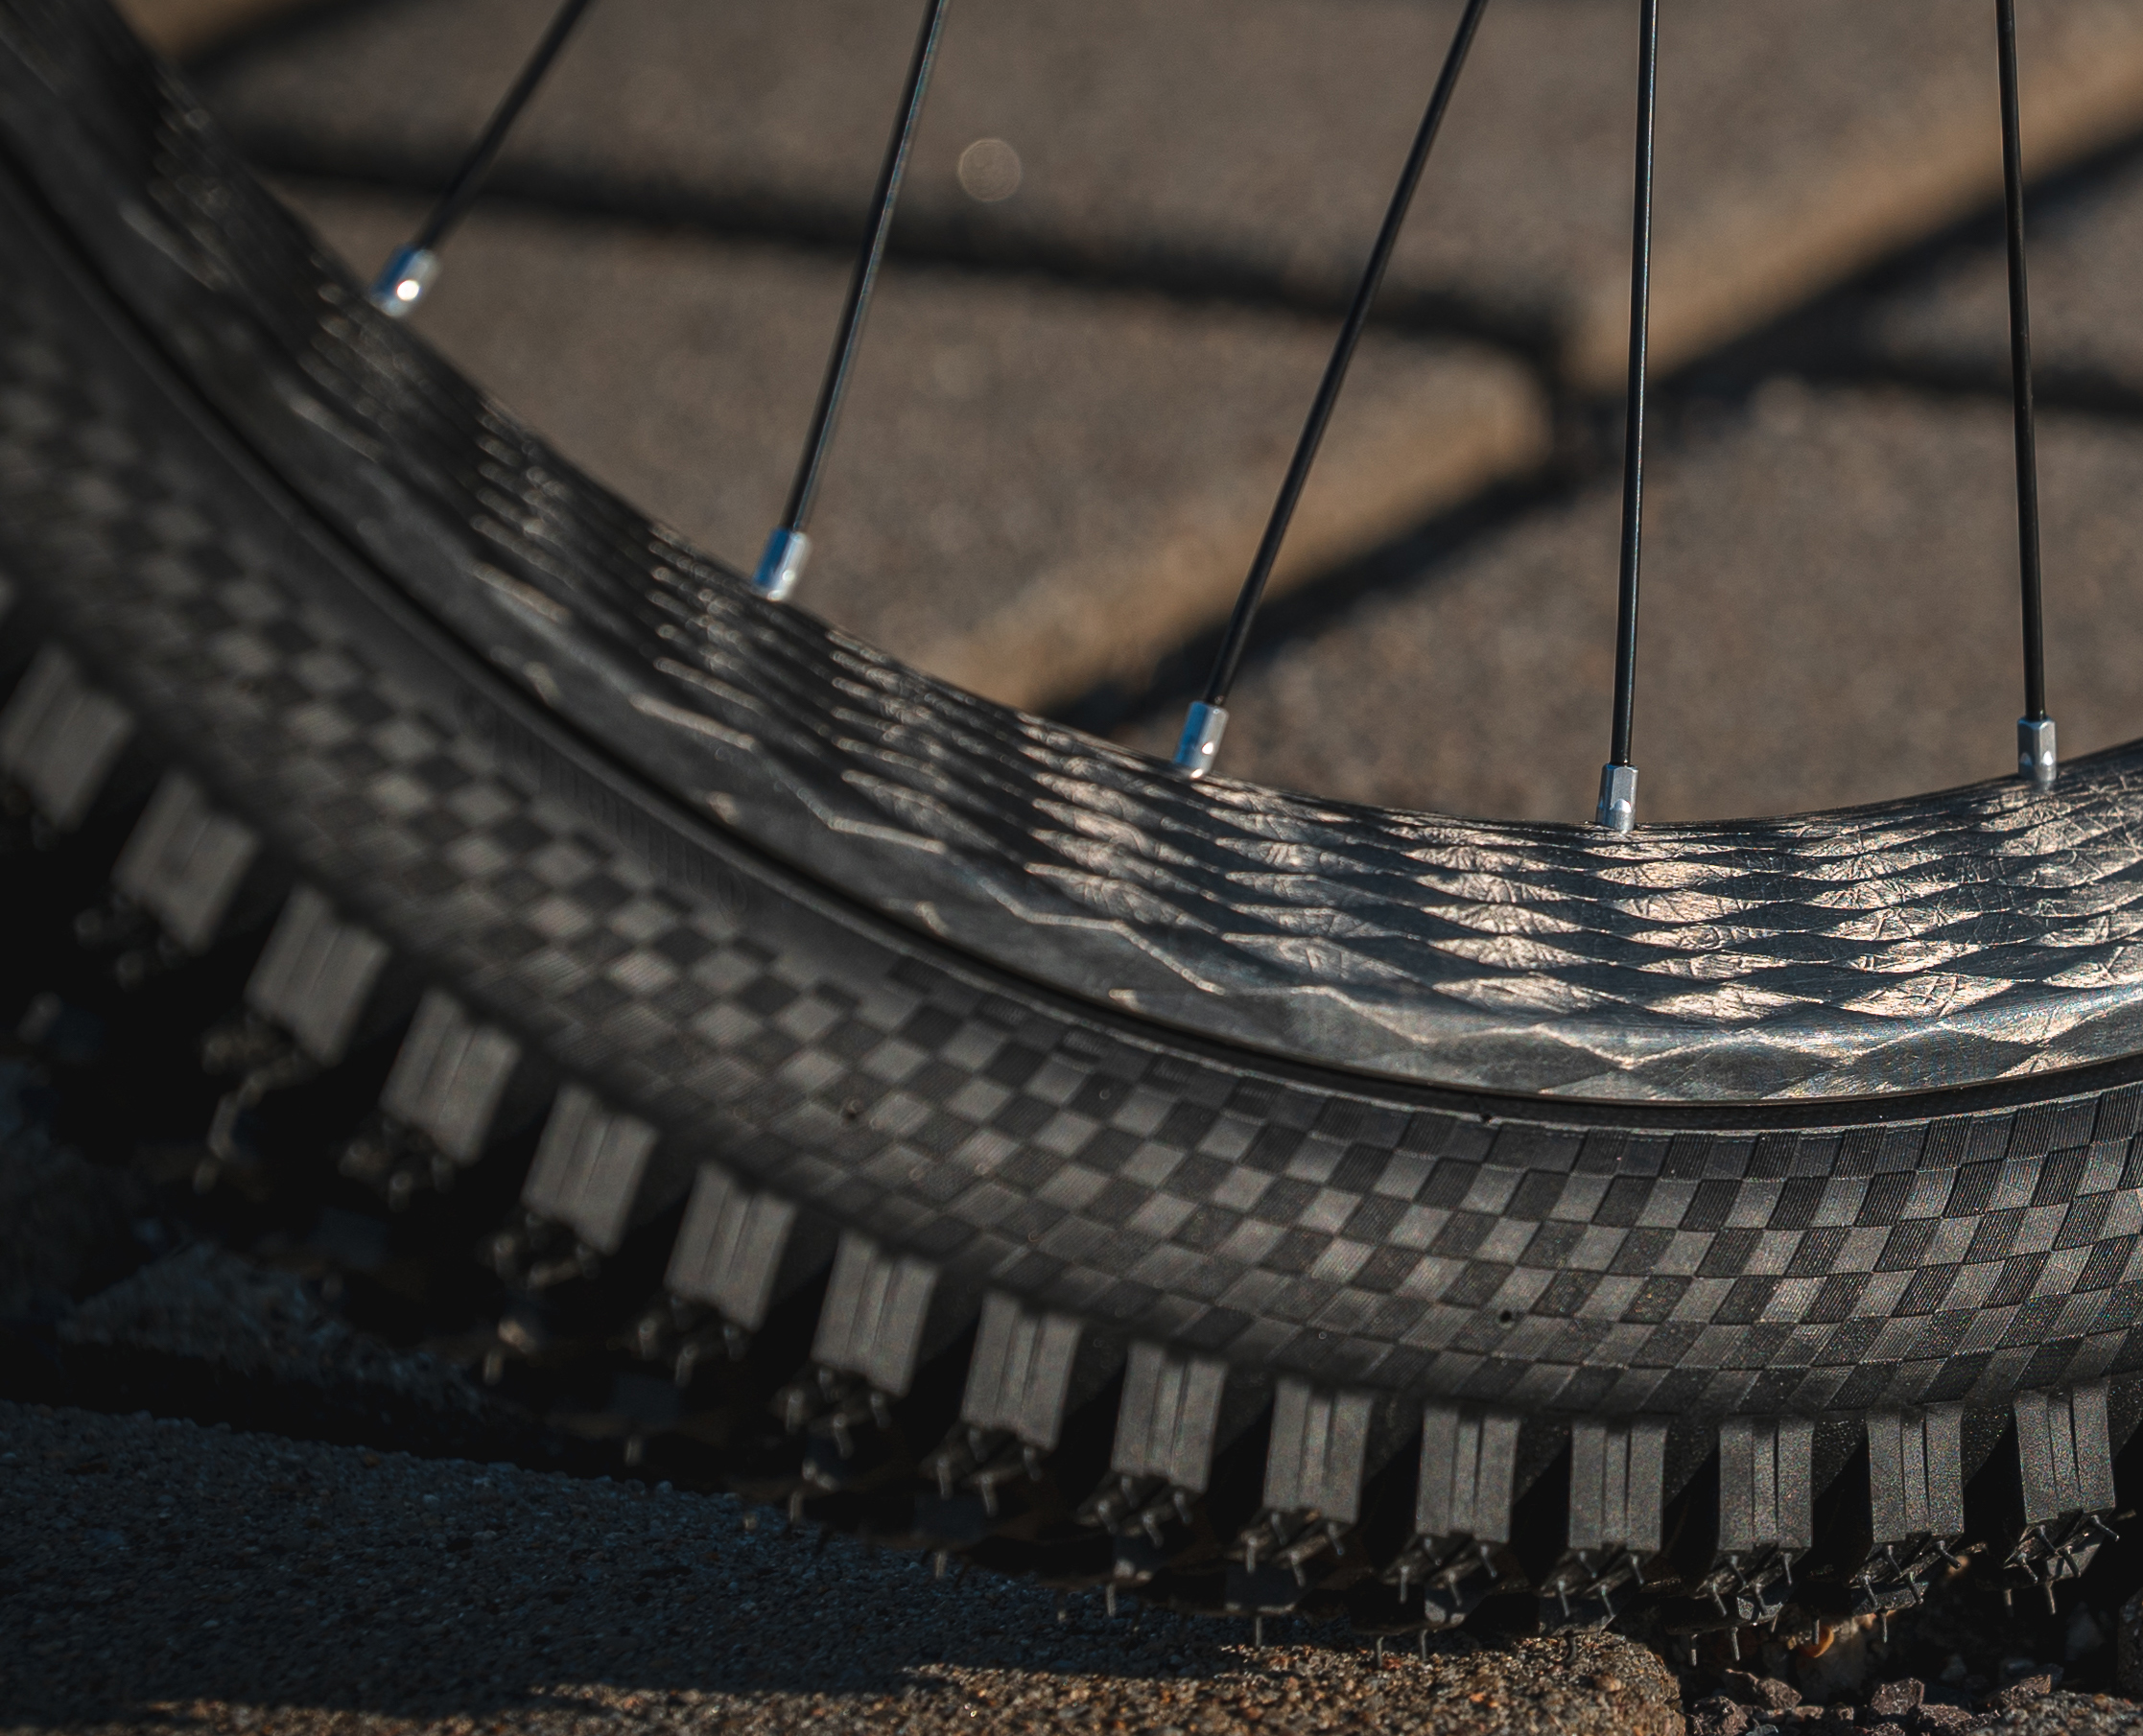 Braided carbon bicycle wheel